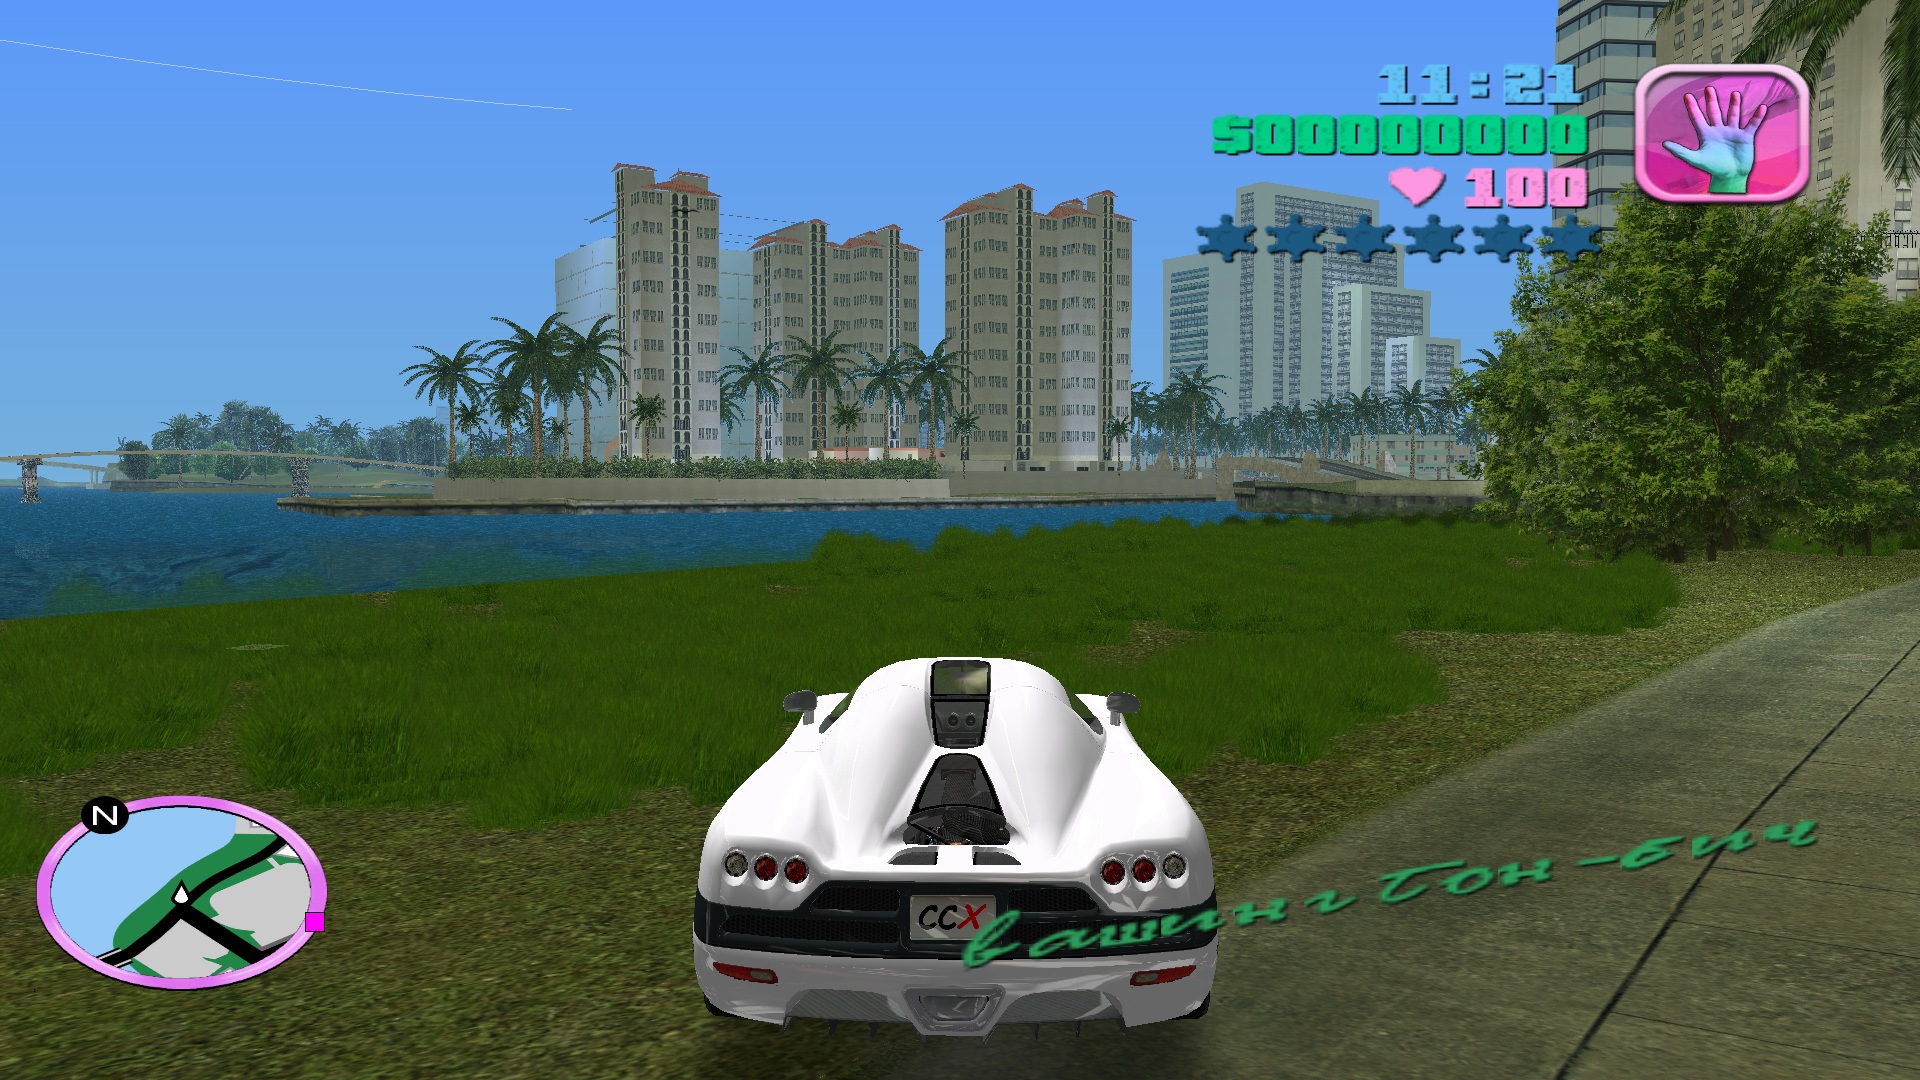 Grand Theft Auto: Vice City - Final Mod